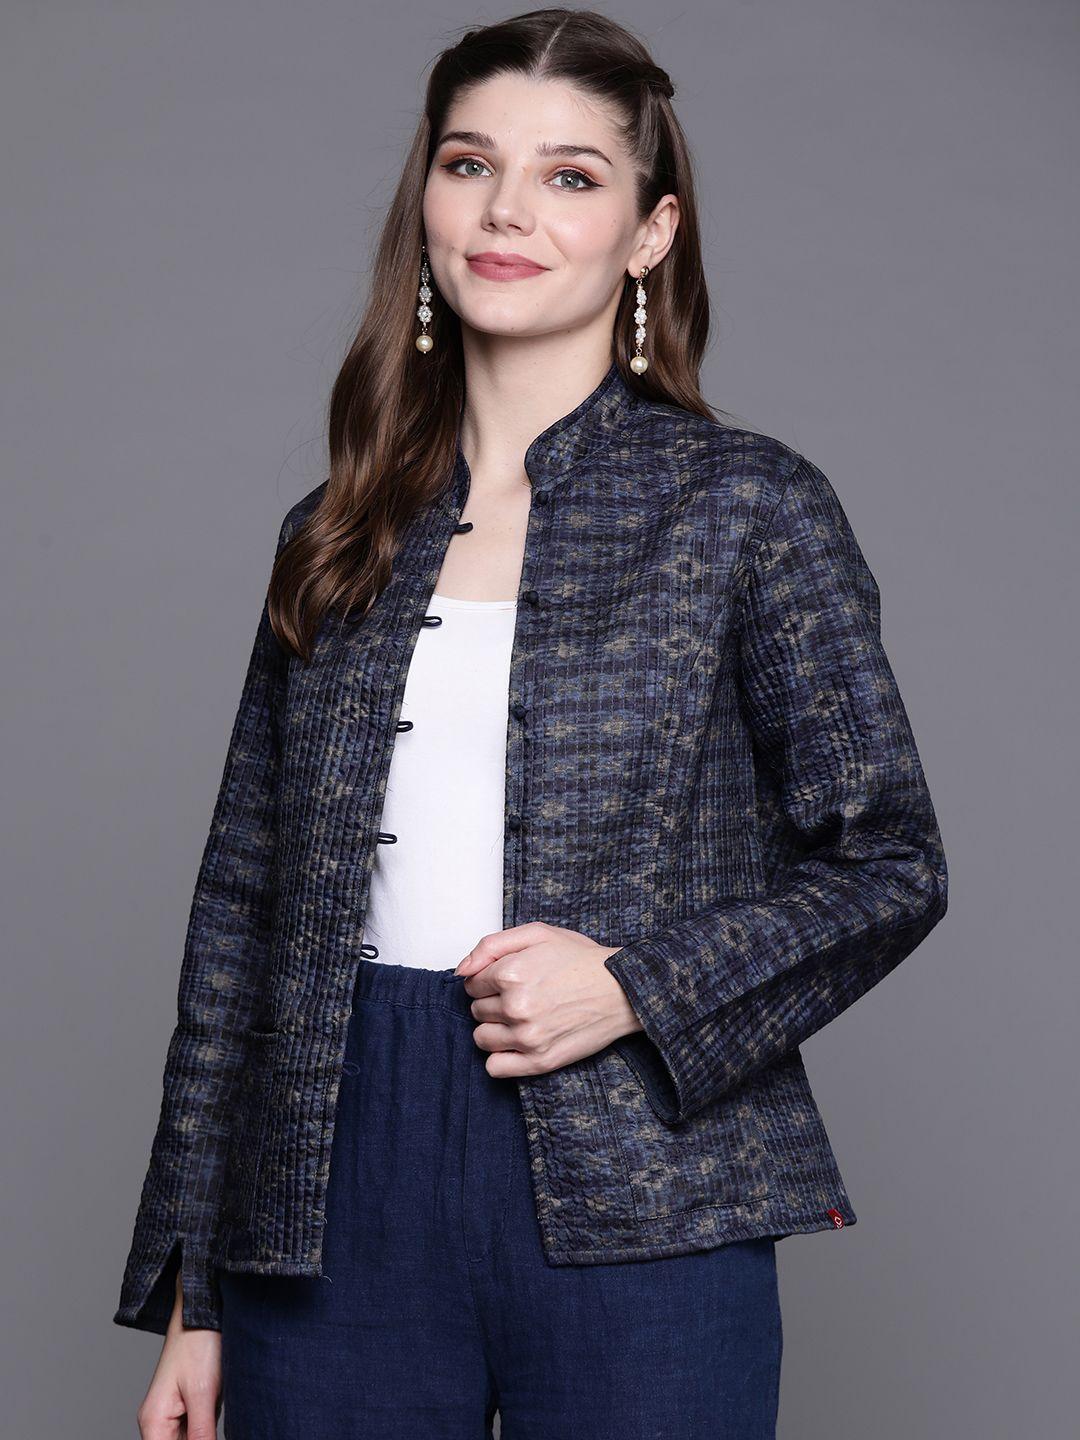 biba women navy blue & grey tailored jacket